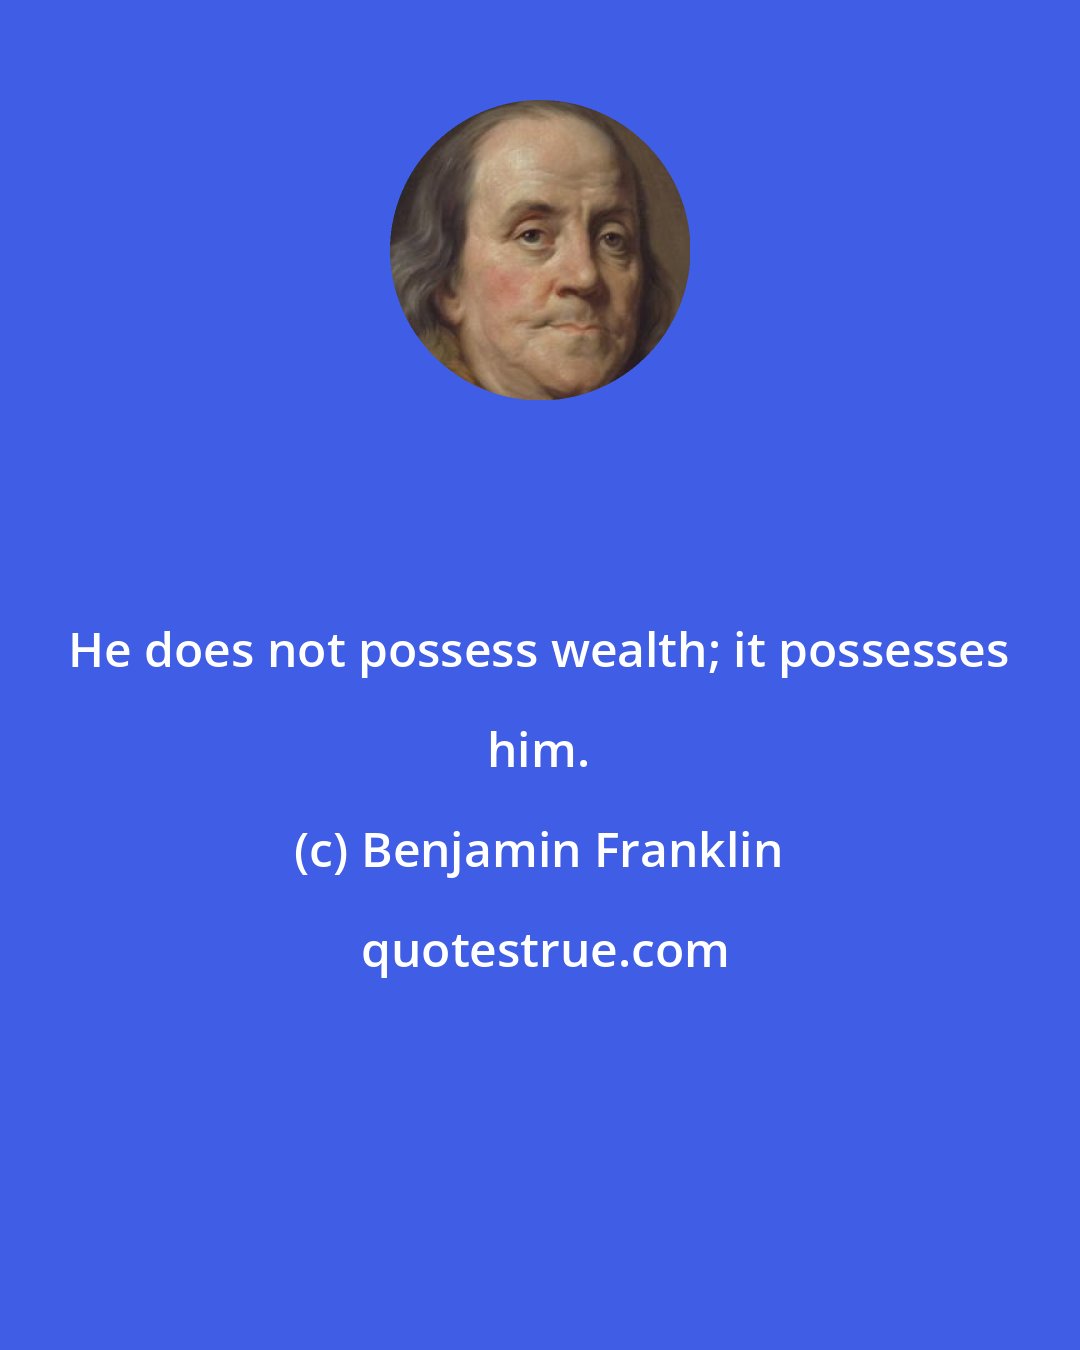 Benjamin Franklin: He does not possess wealth; it possesses him.